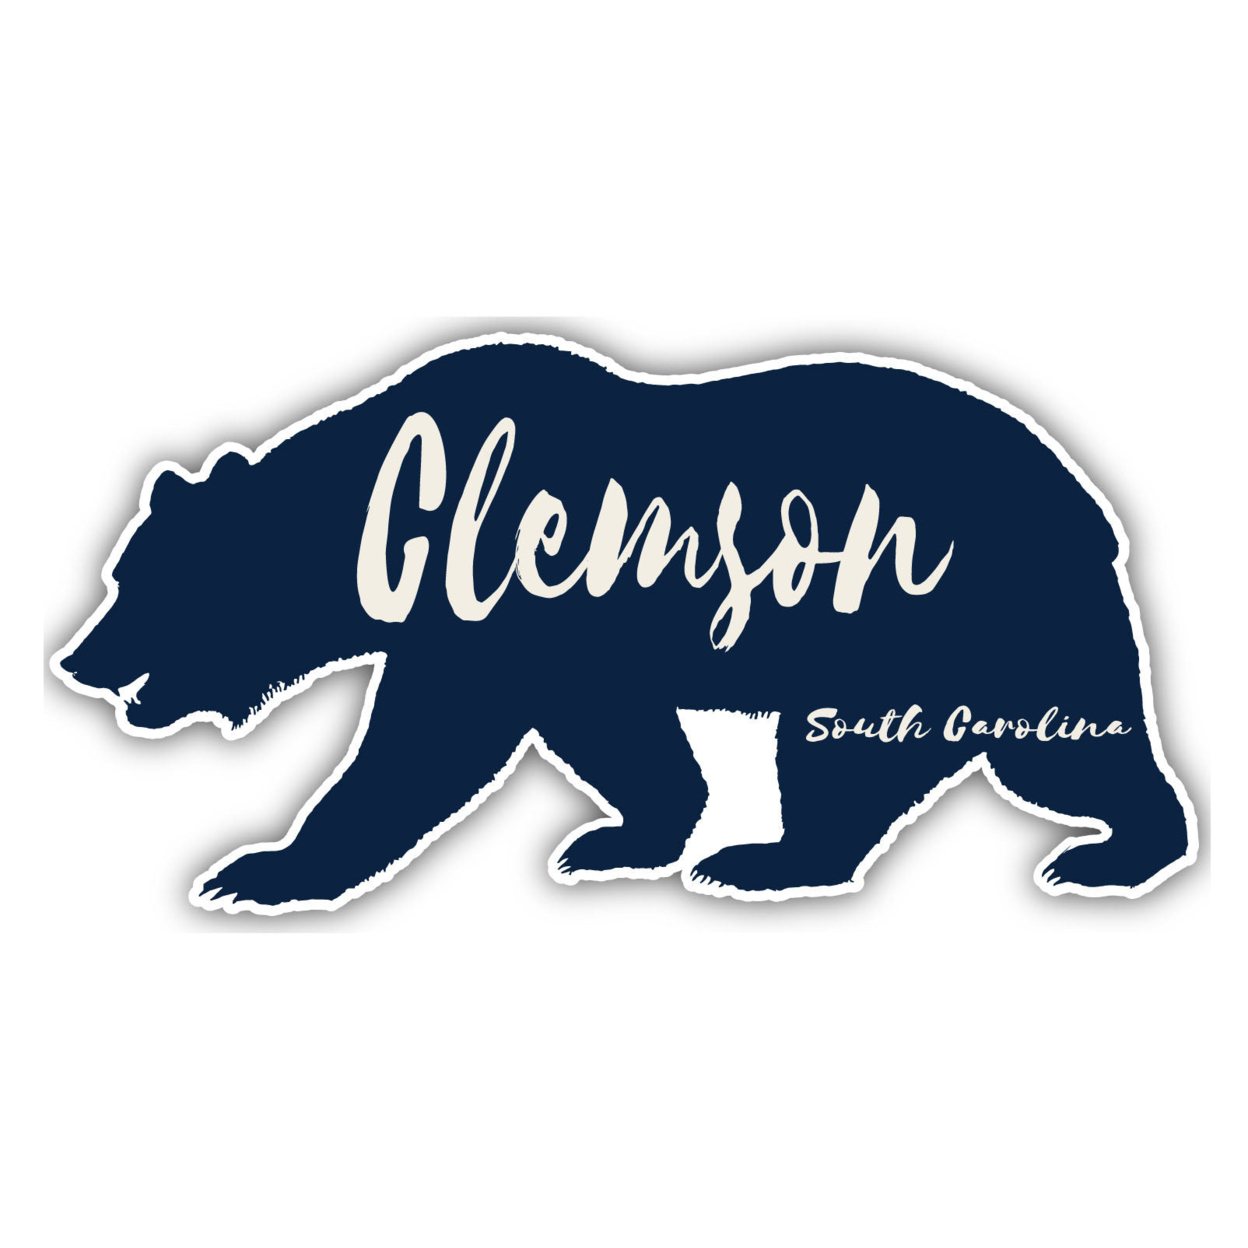 Clemson South Carolina Souvenir Decorative Stickers (Choose Theme And Size) - 4-Pack, 10-Inch, Tent